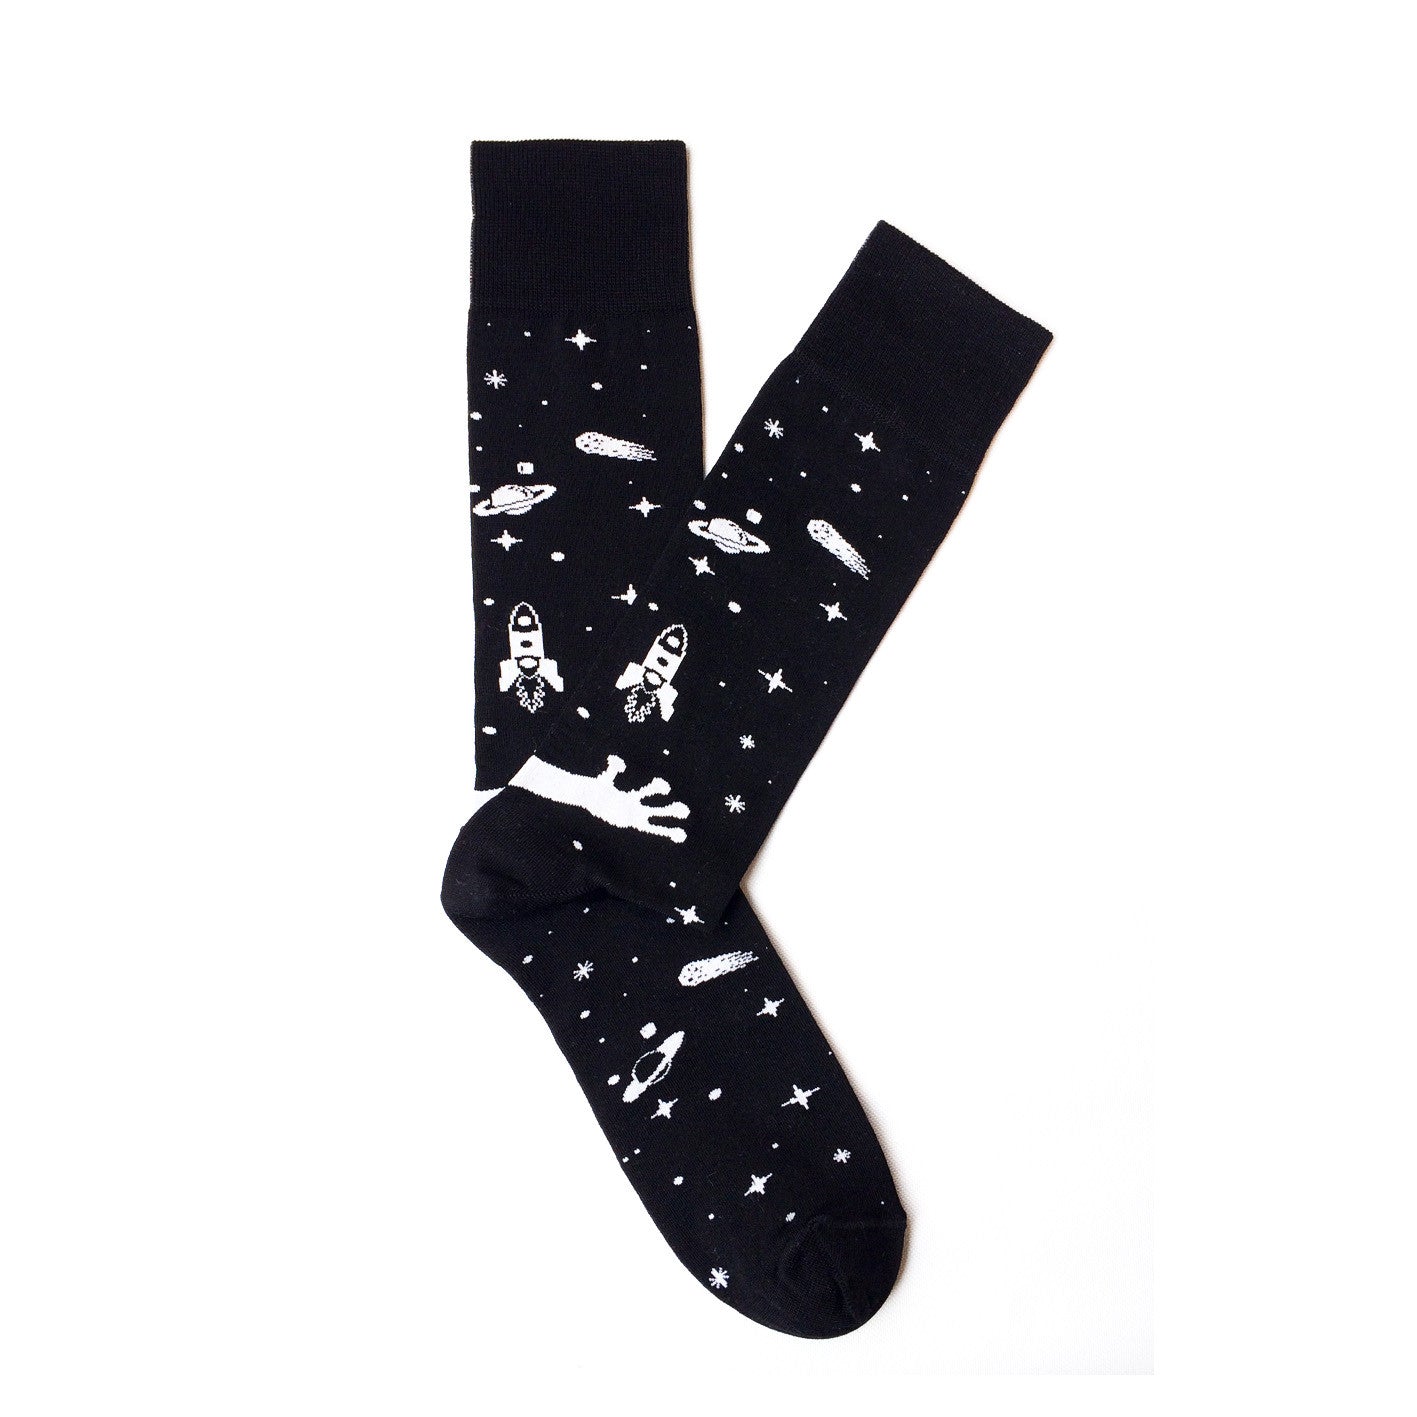 Giraffecool-Giraffe-Cool-Brand-Black-White-Galaxy-Space-Mercerized-Cotton-Fashion-Socks-Open-Pair